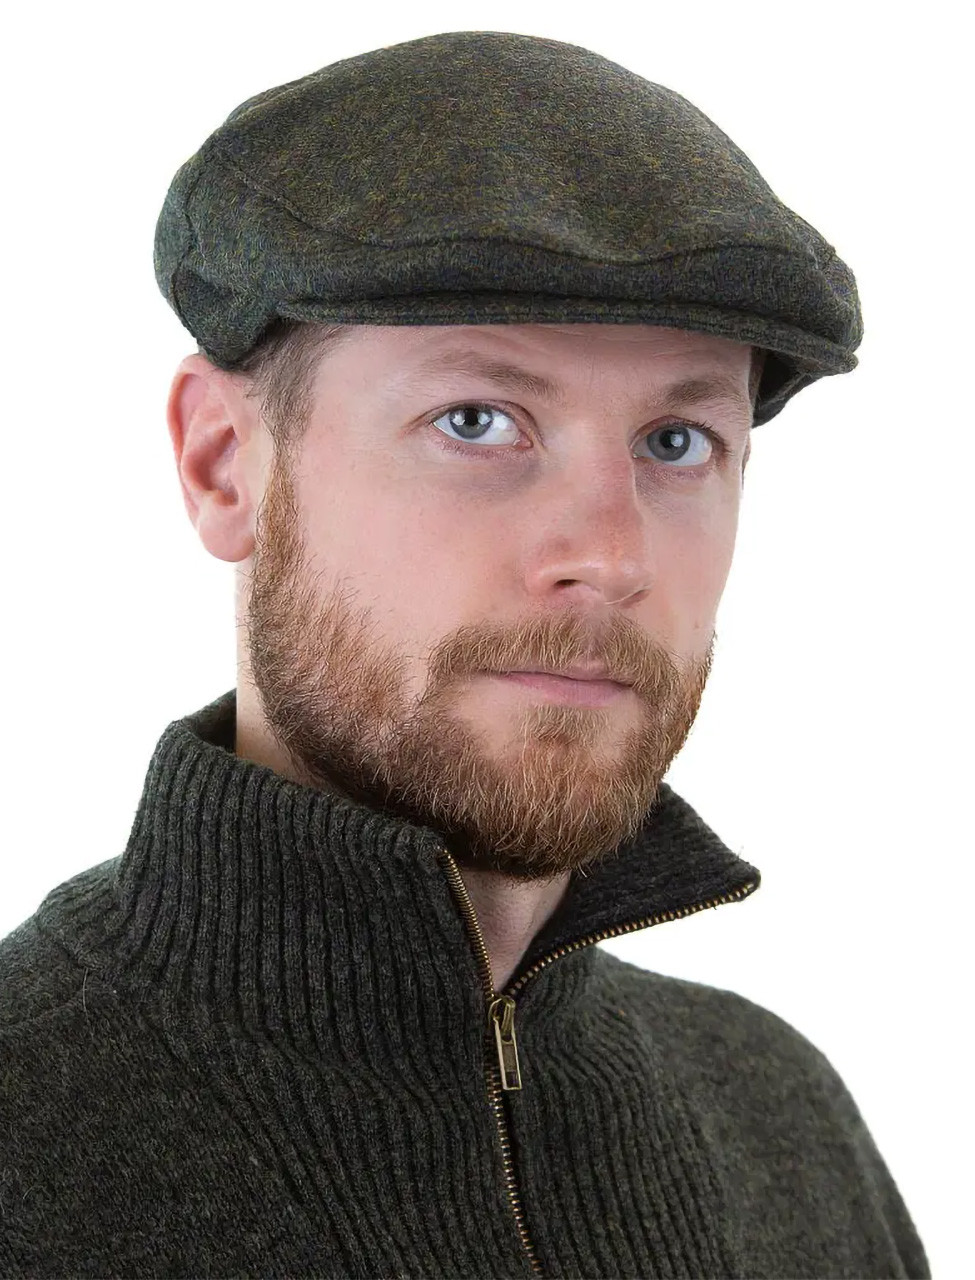 Tweed Trapper Hat / Aviator Cap Style - Dark Green